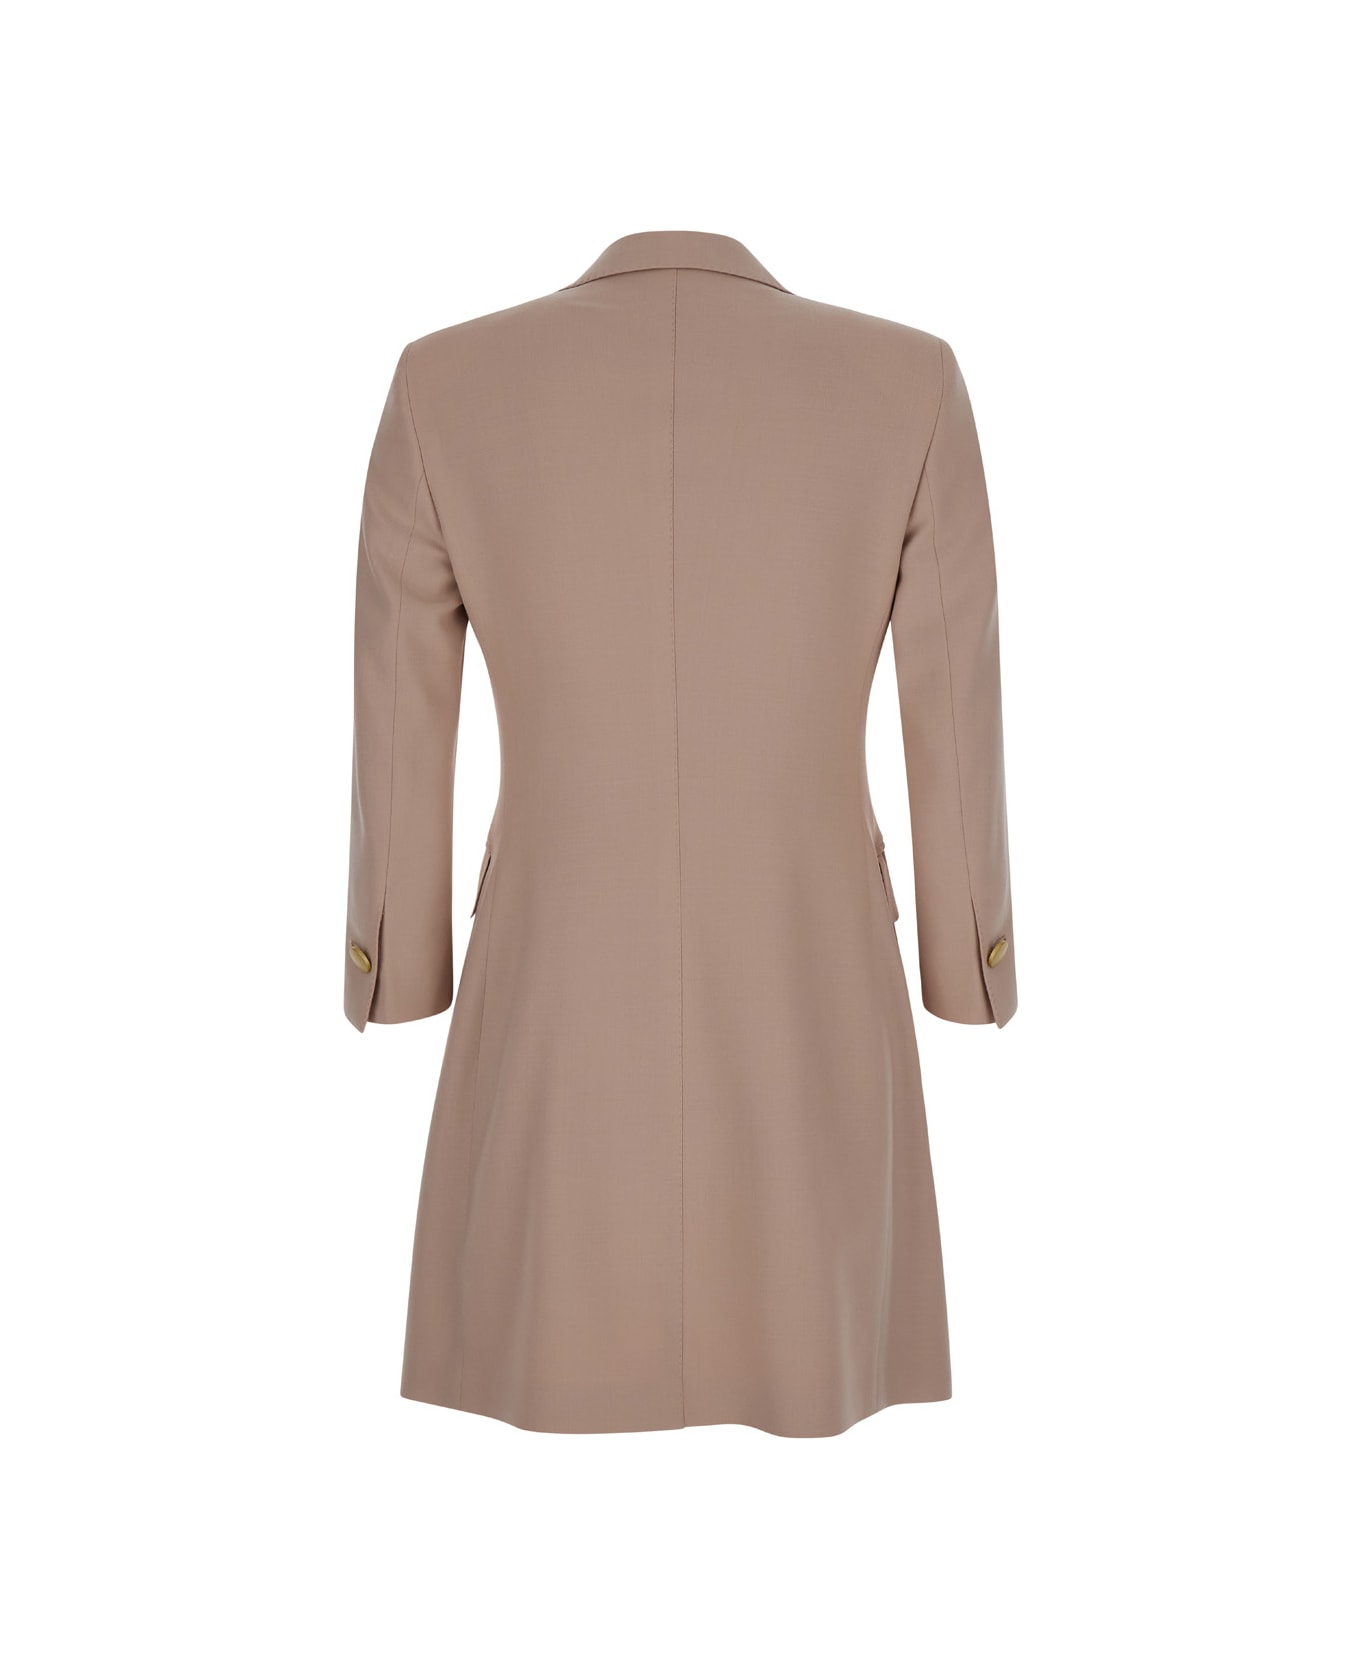 Tagliatore Beige Blazer Dress With Buttons In Wool Blend Stretch Woman - Beige